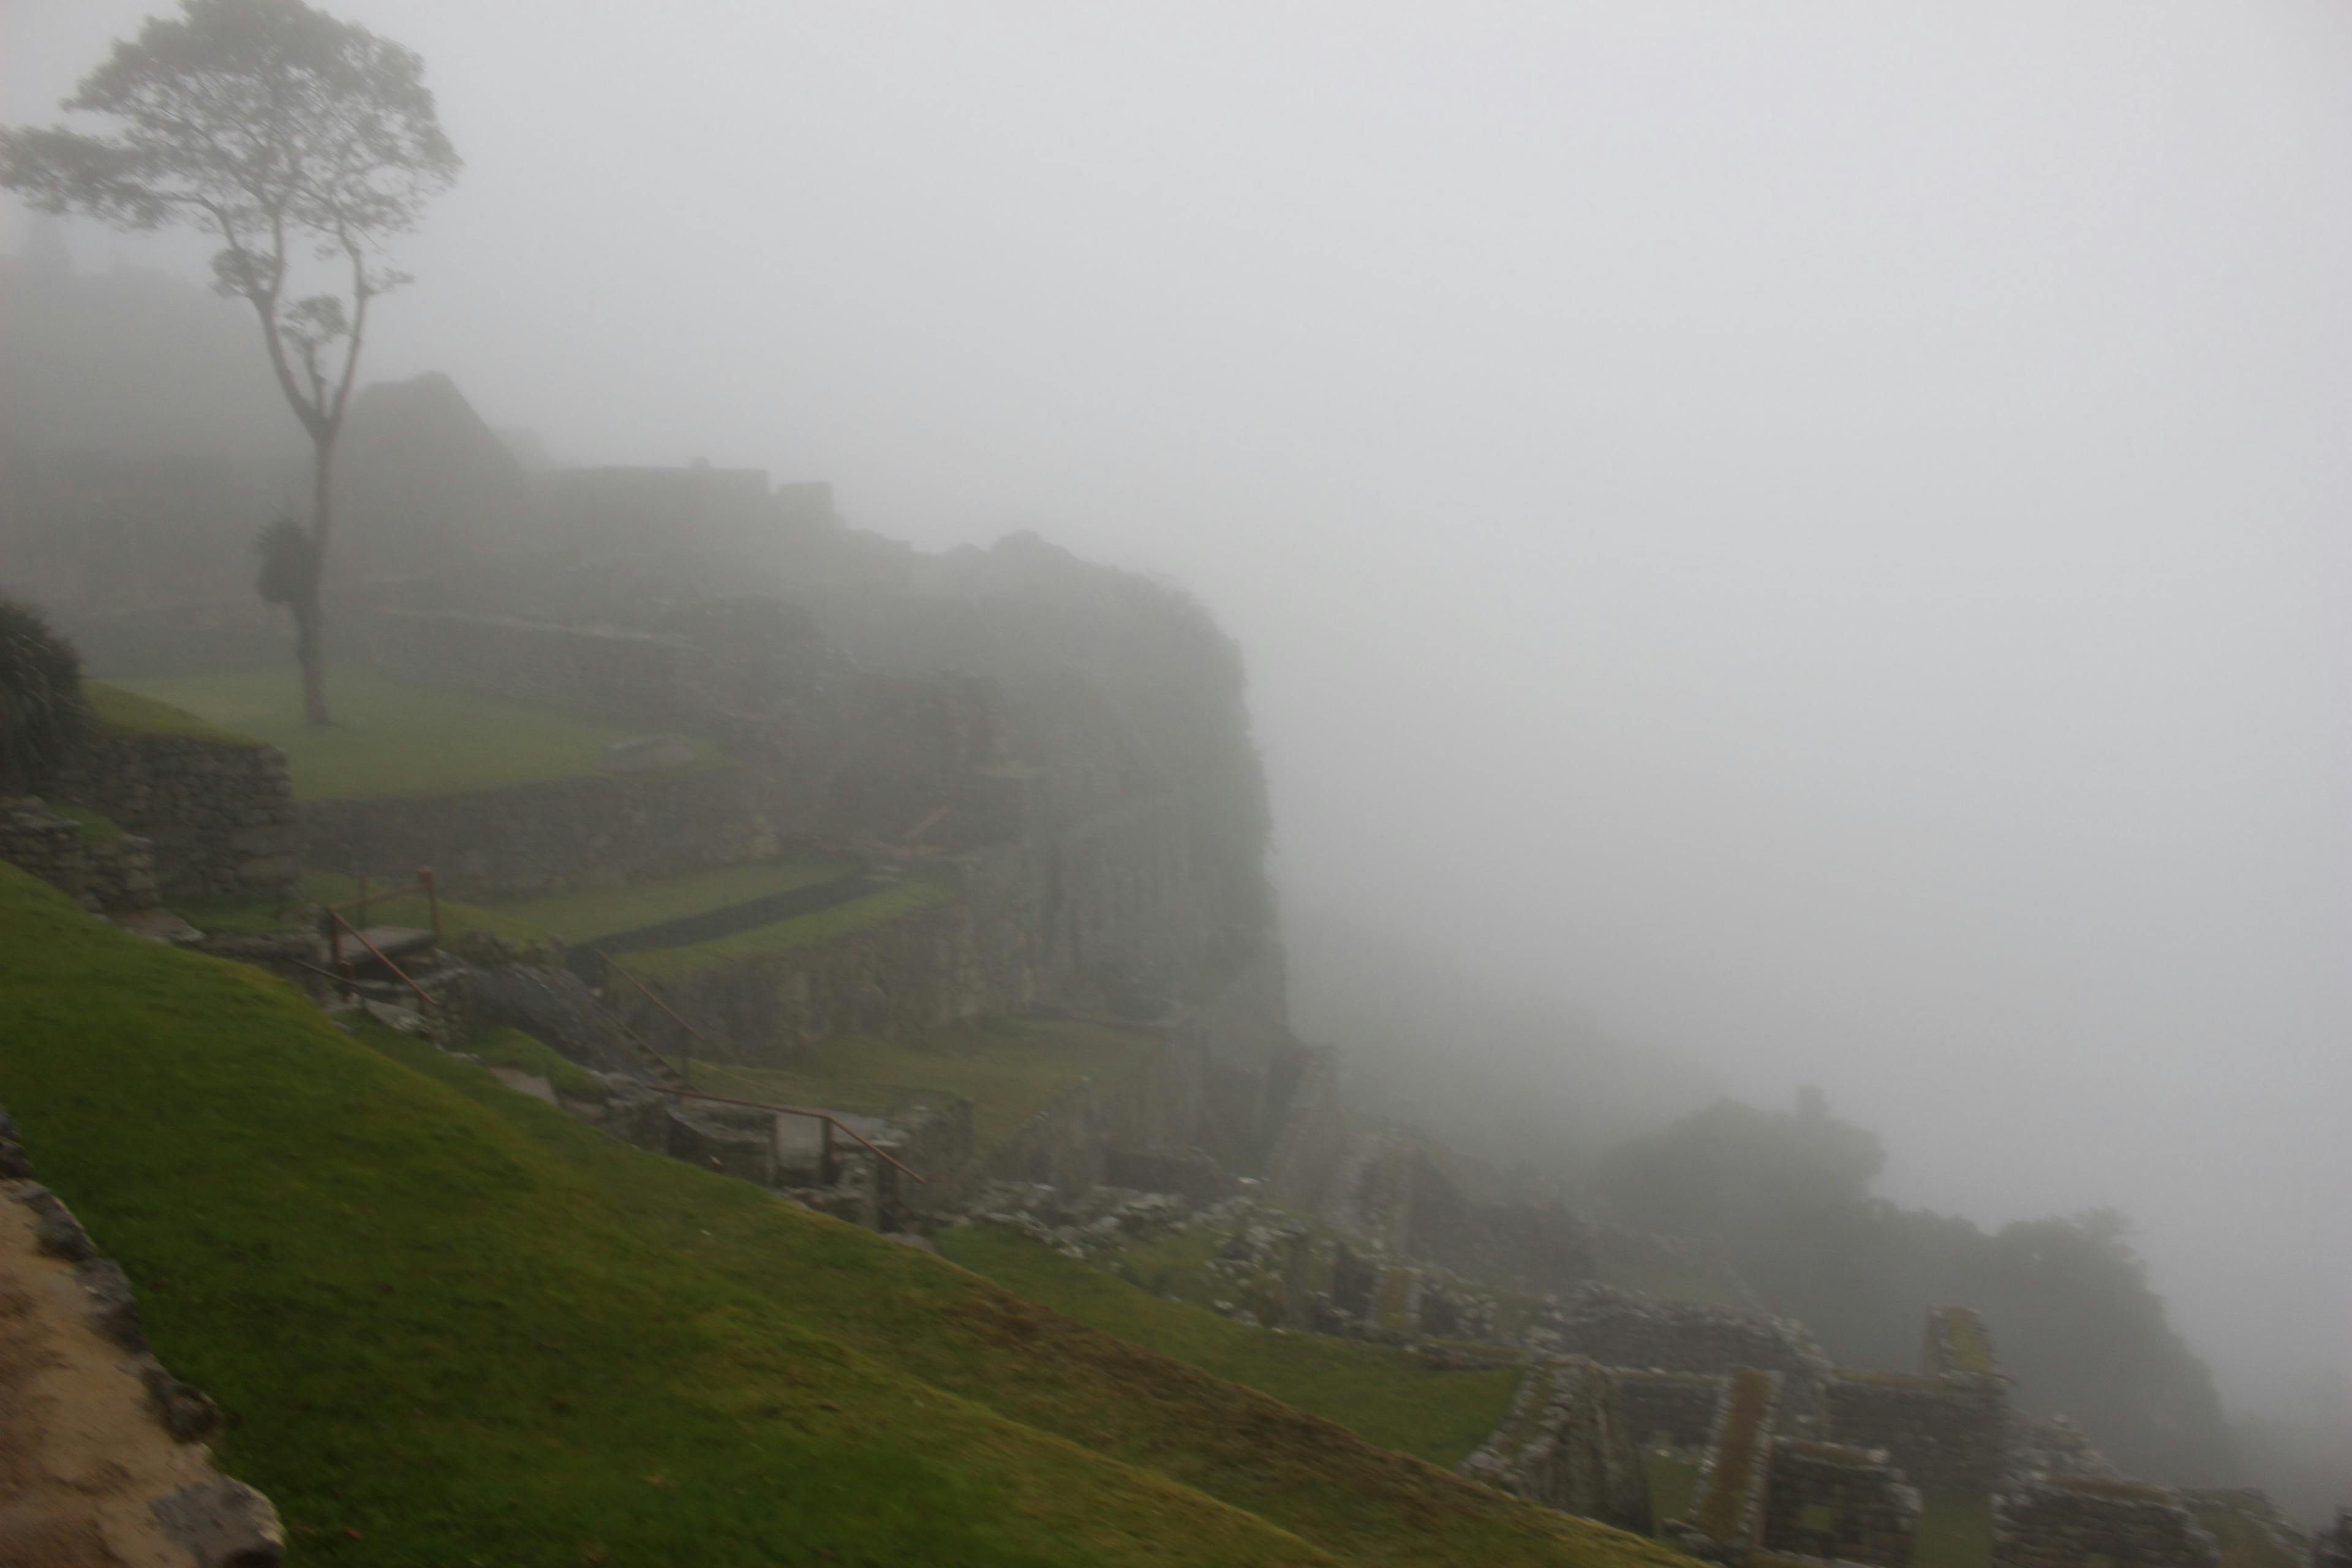 Very foggy view of Machu Picchu